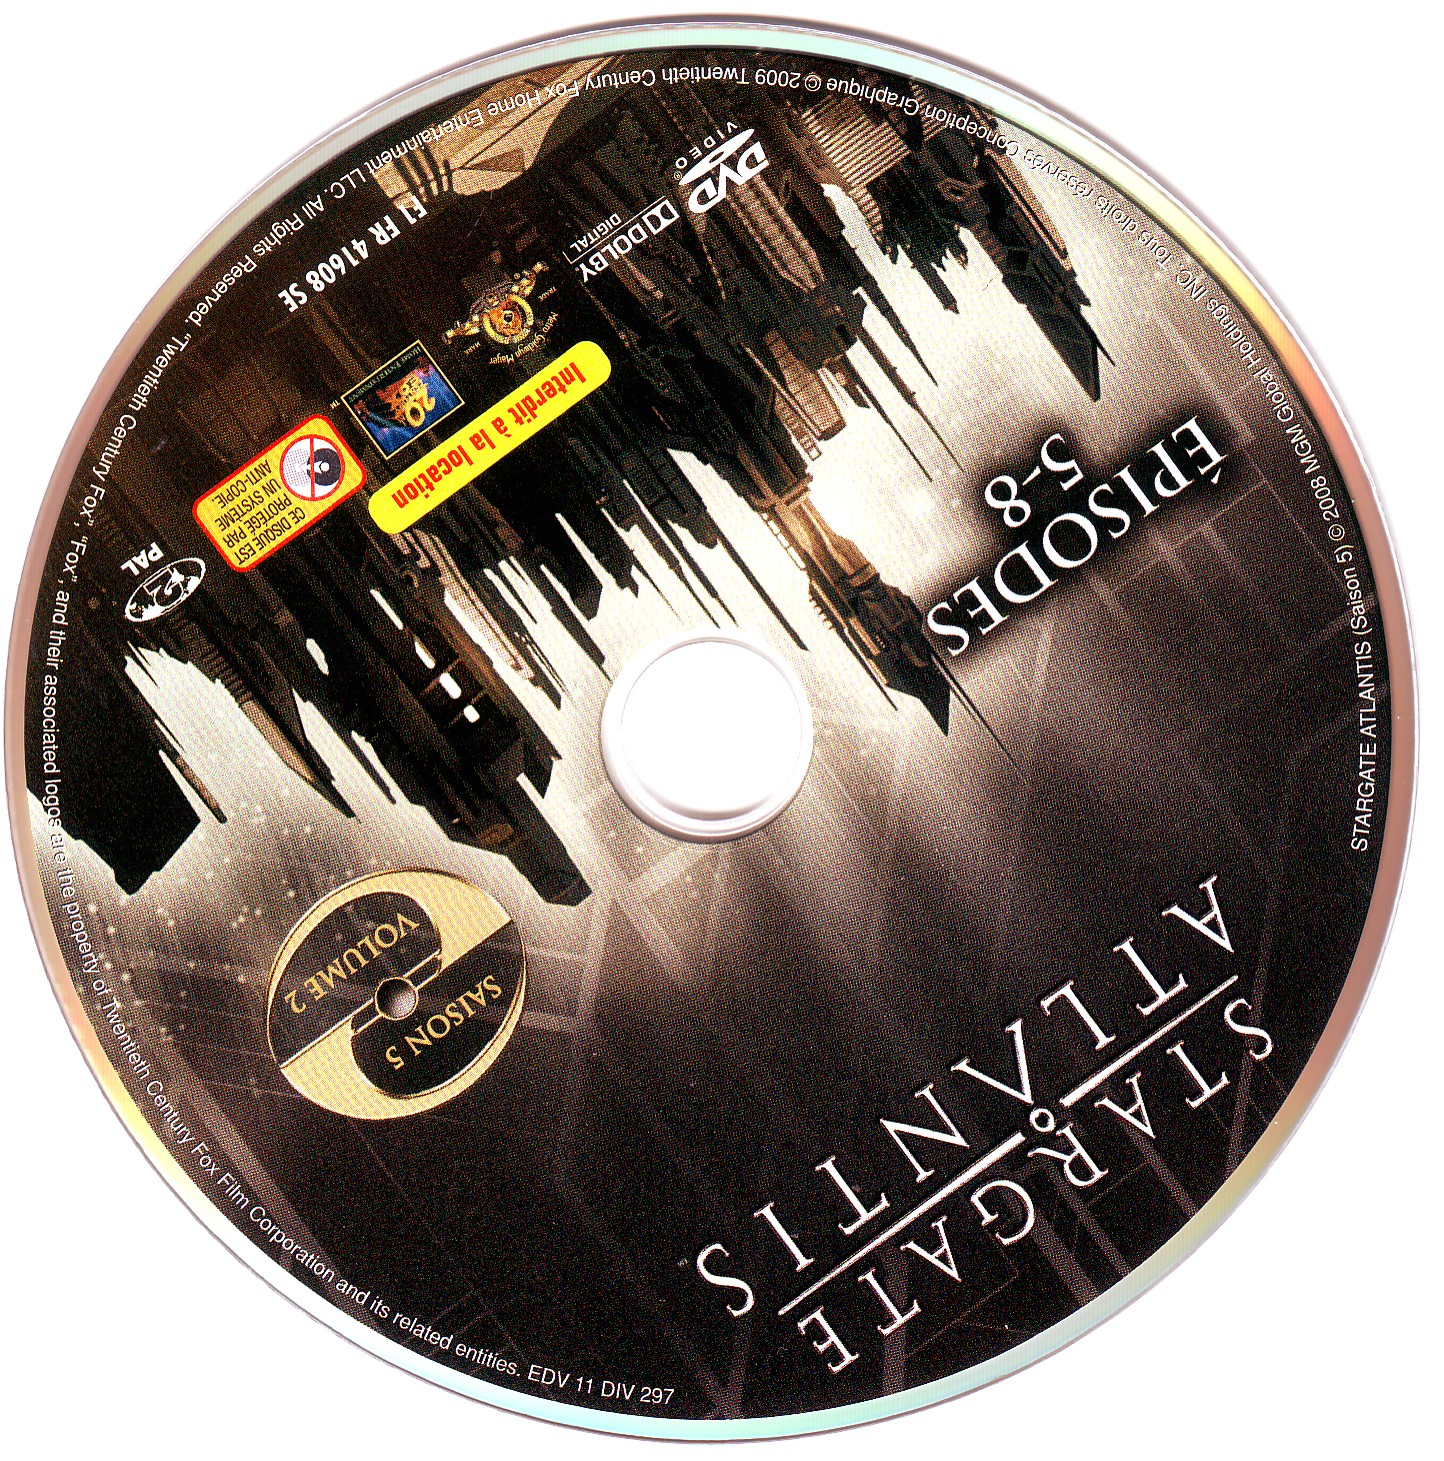 Stargate Atlantis saison 5 DISC 2